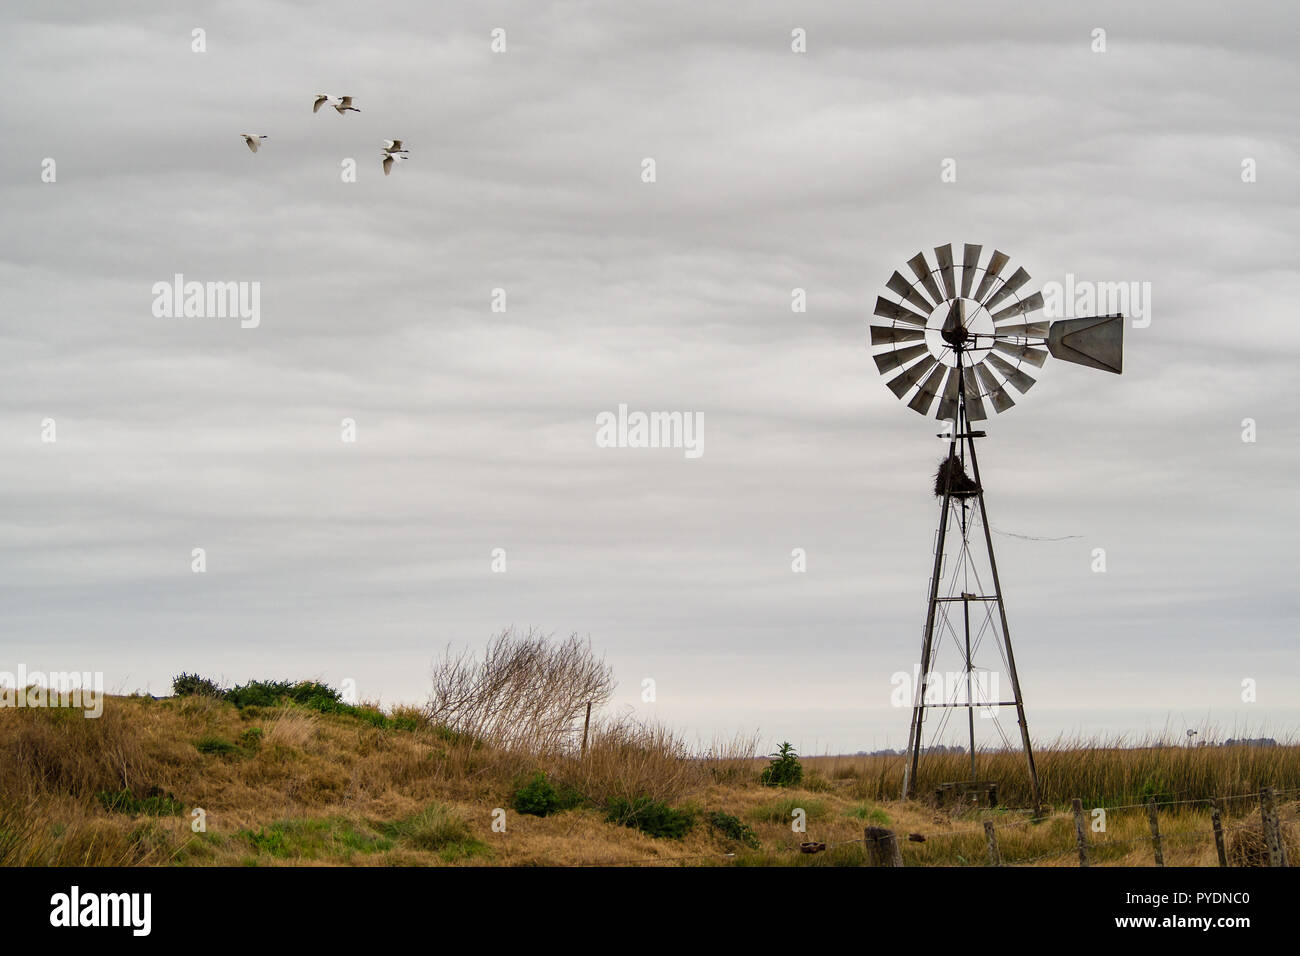 Landscape with windmill, Pampas, cordova, Argentina, cows Stock Photo